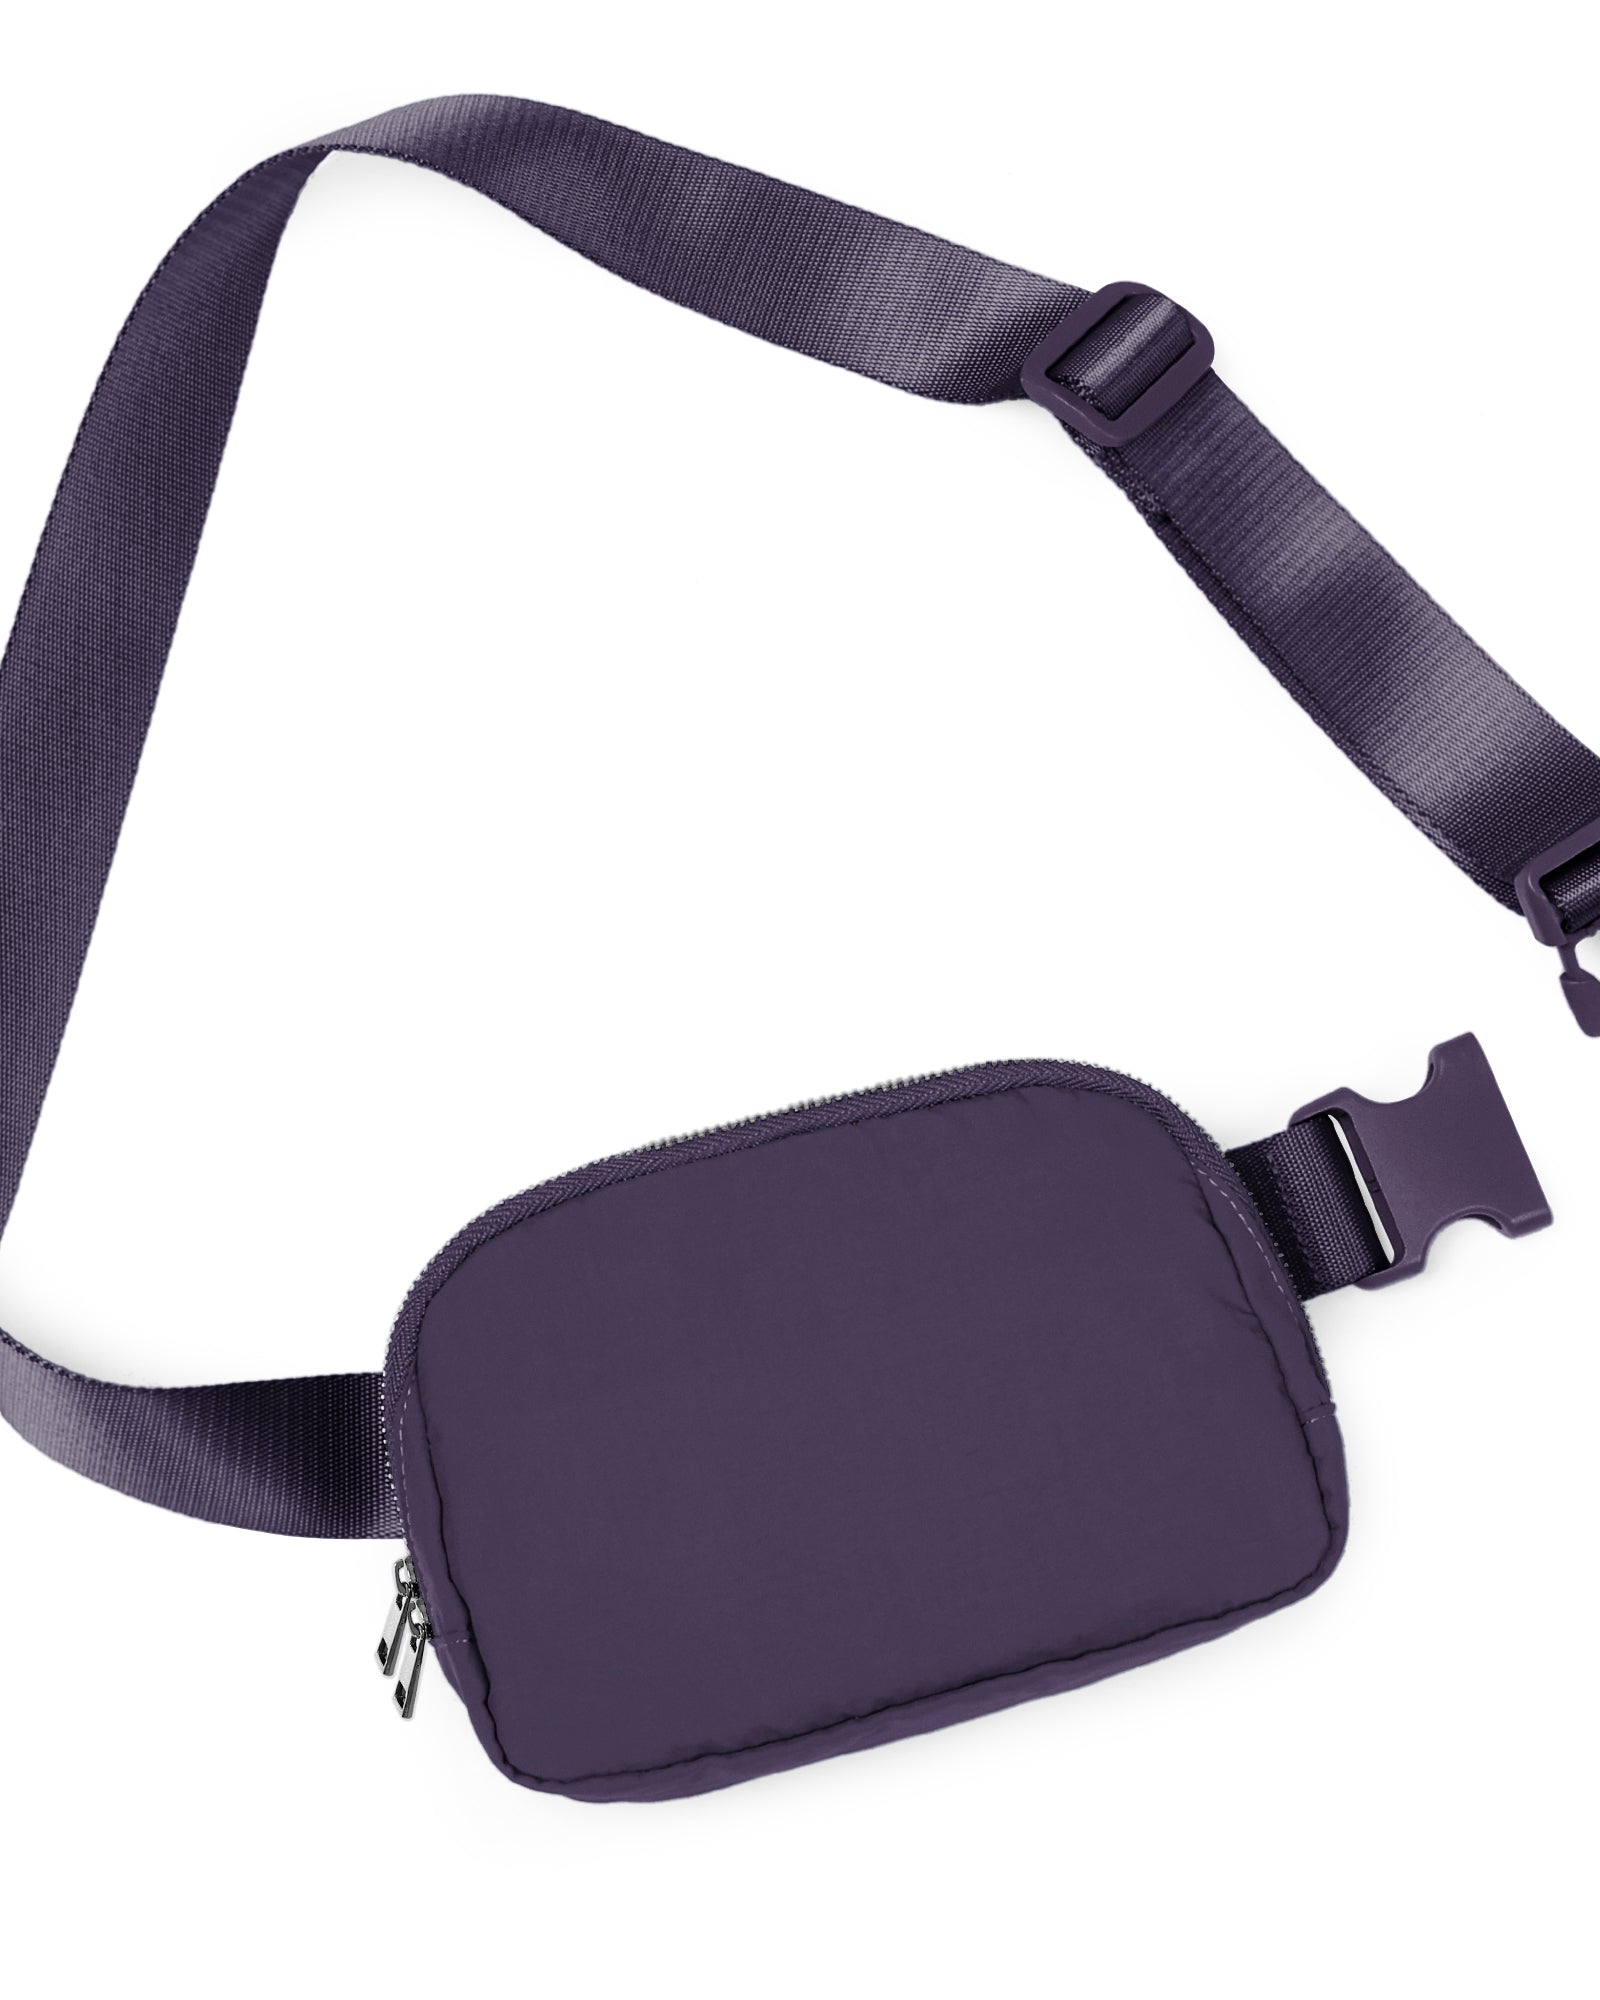 Unisex Two-Way Zip Mini Belt Bag Navy Cosmos 8" x 2" x 5.5" - ododos